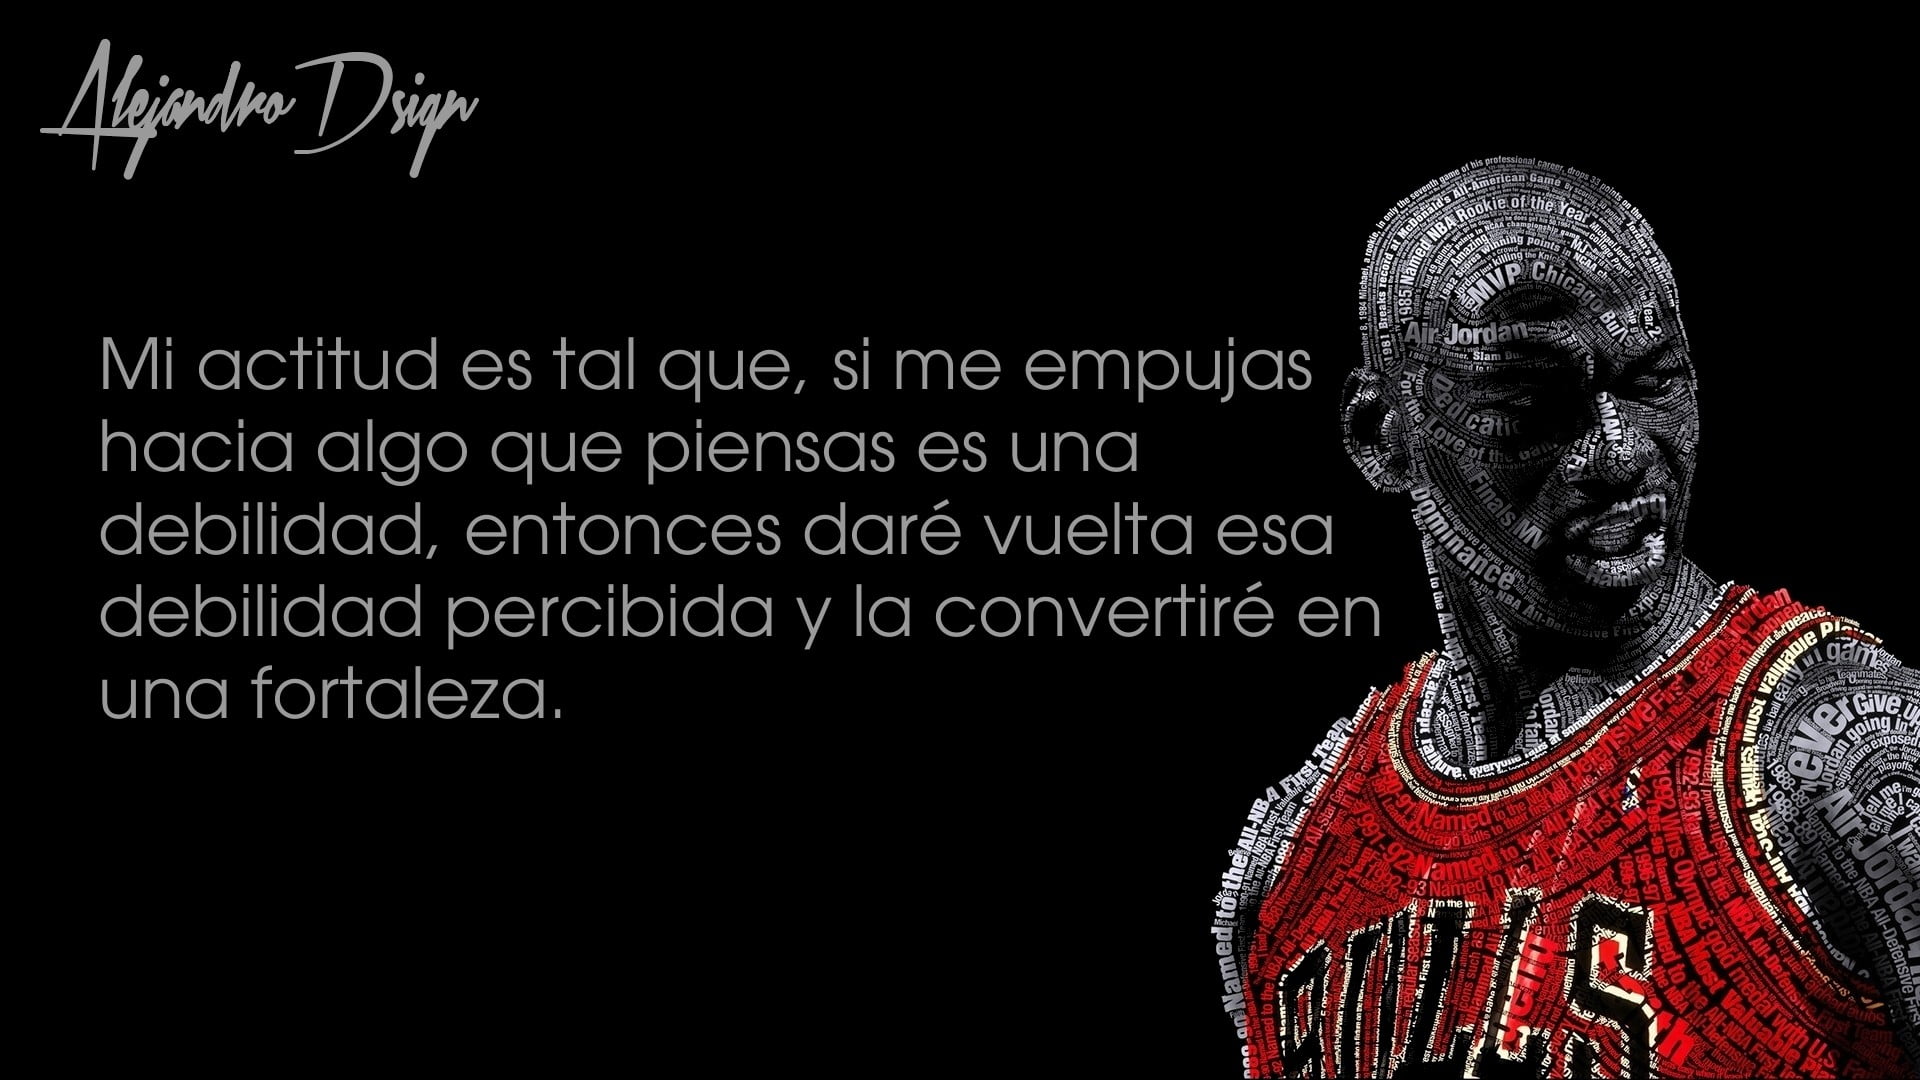 Michael Jordan with text overlay, typographic portraits, Michael Jordan, basketball, Chicago Bulls